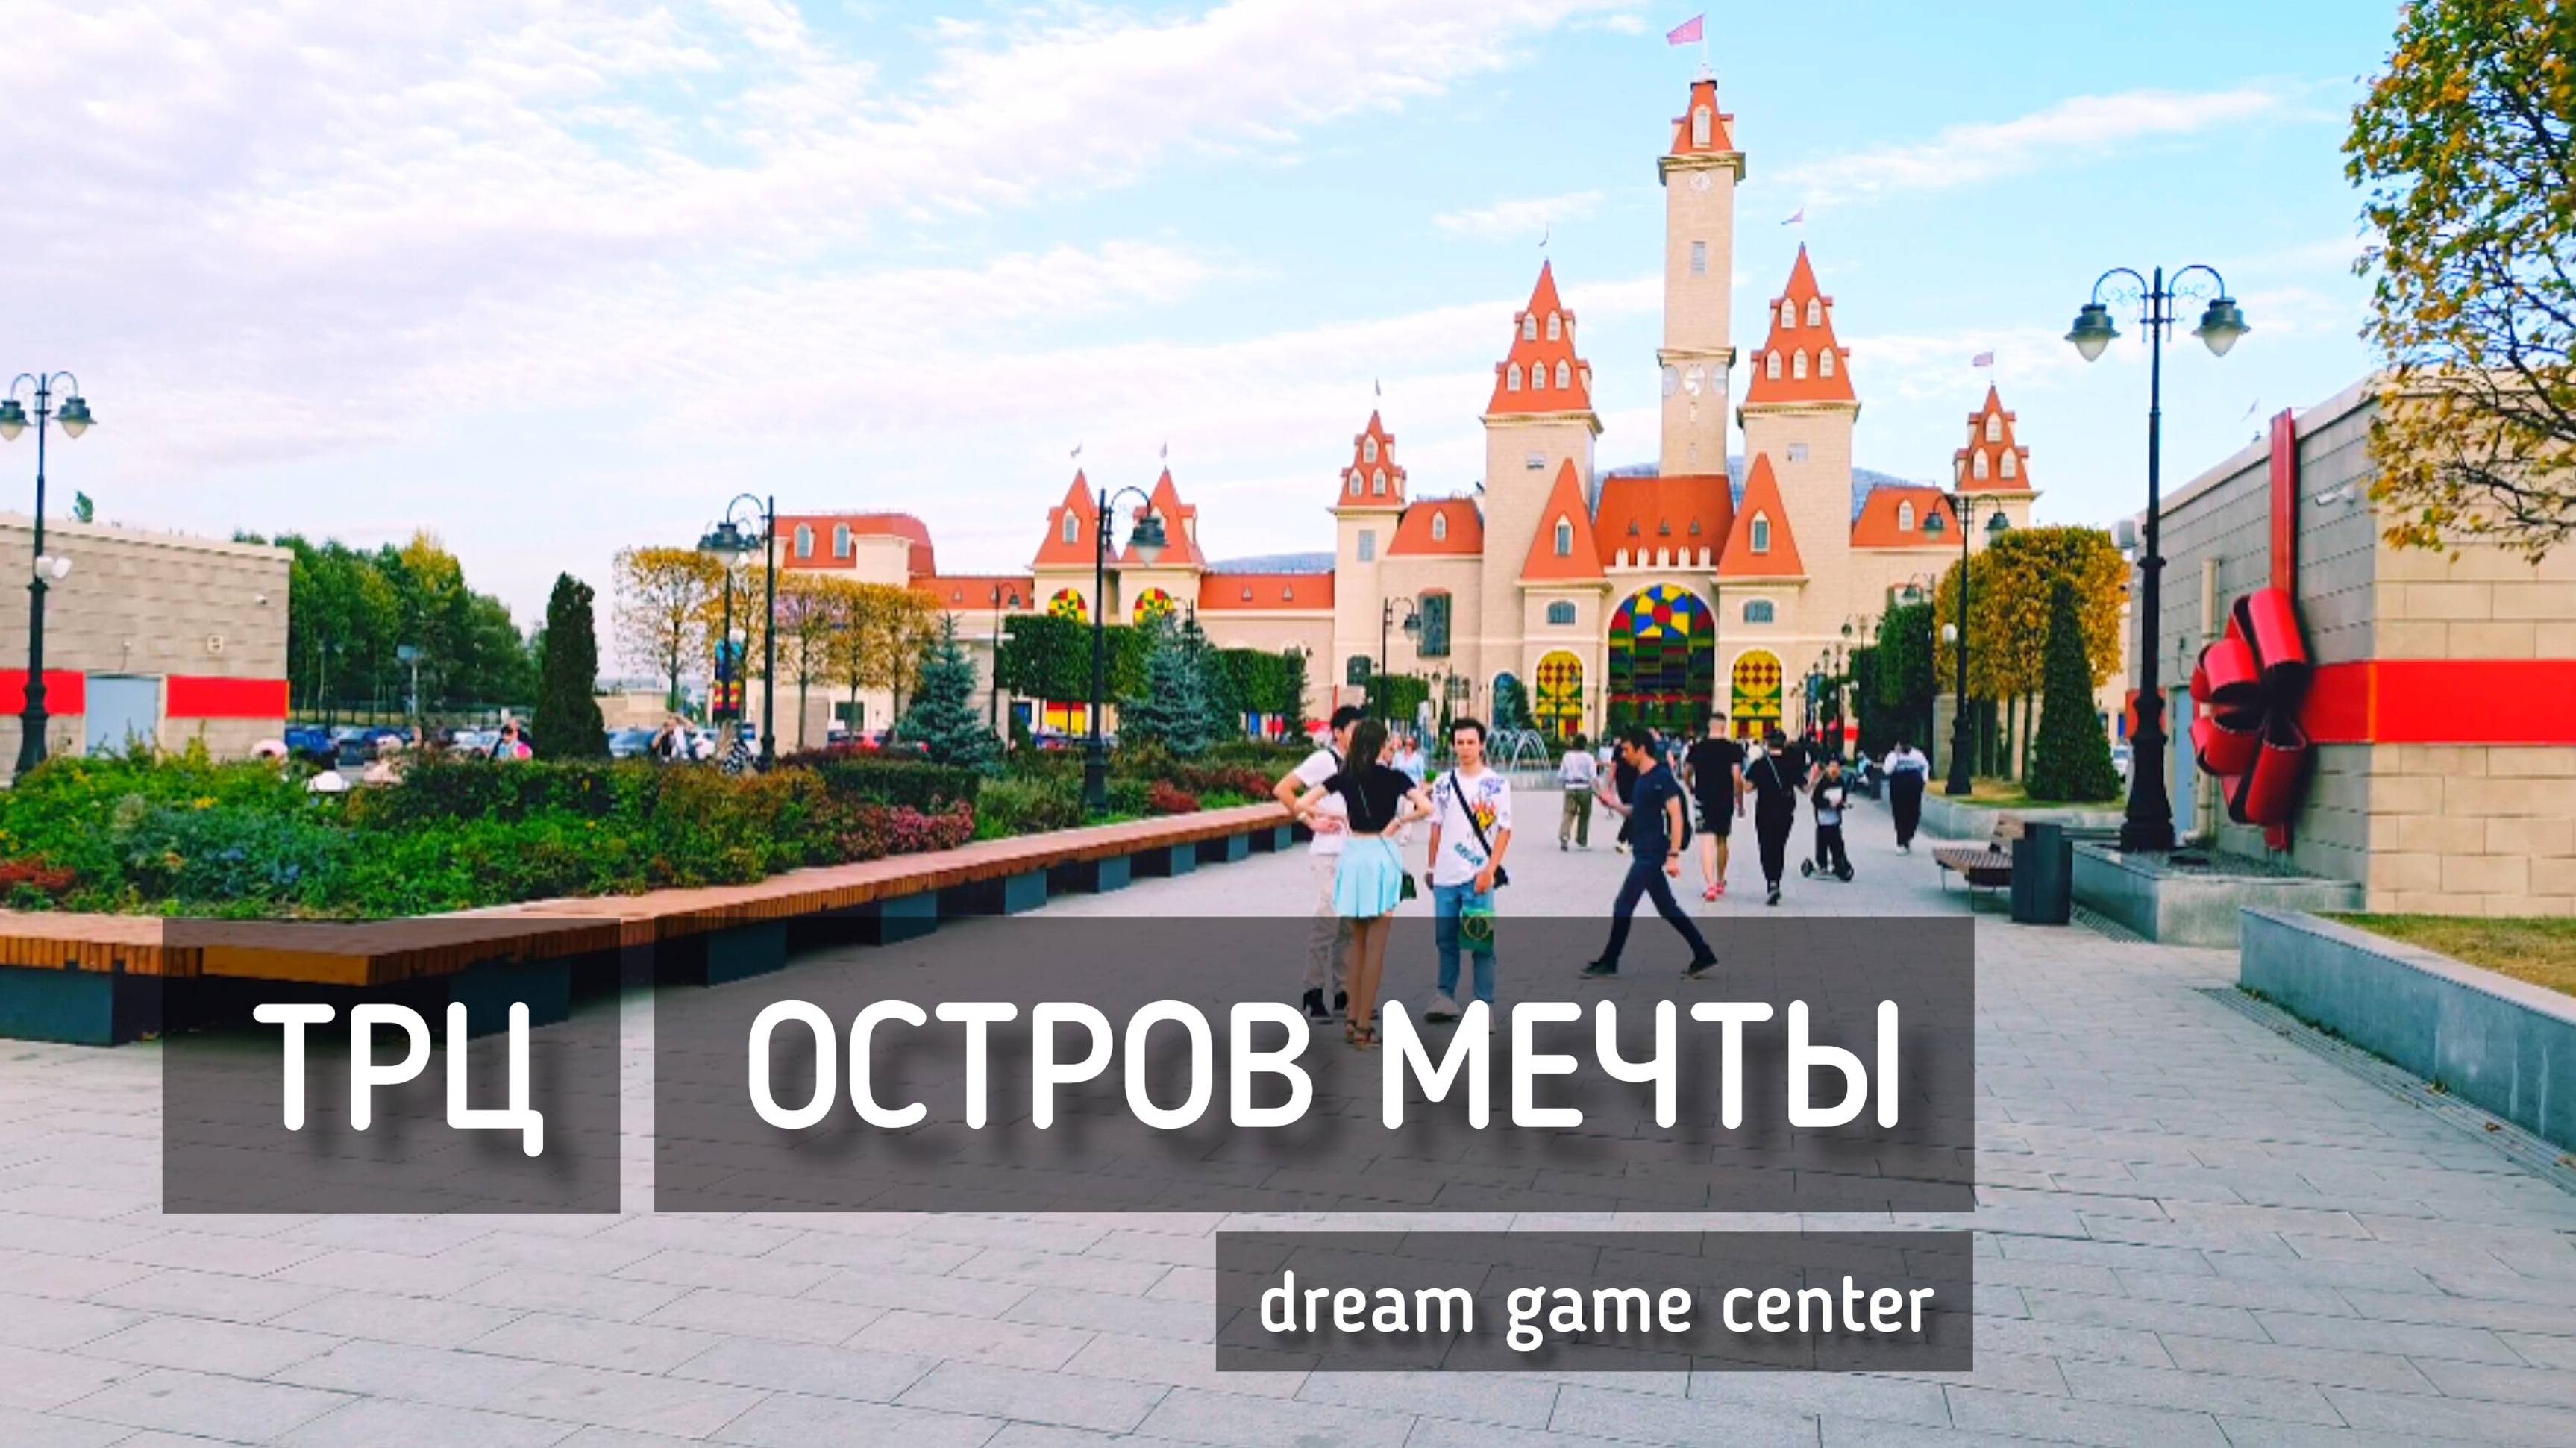 ТРЦ Остров Мечты. Dream Game Center - игровой центр / Dream Island #москва #трц #островмечты #игра